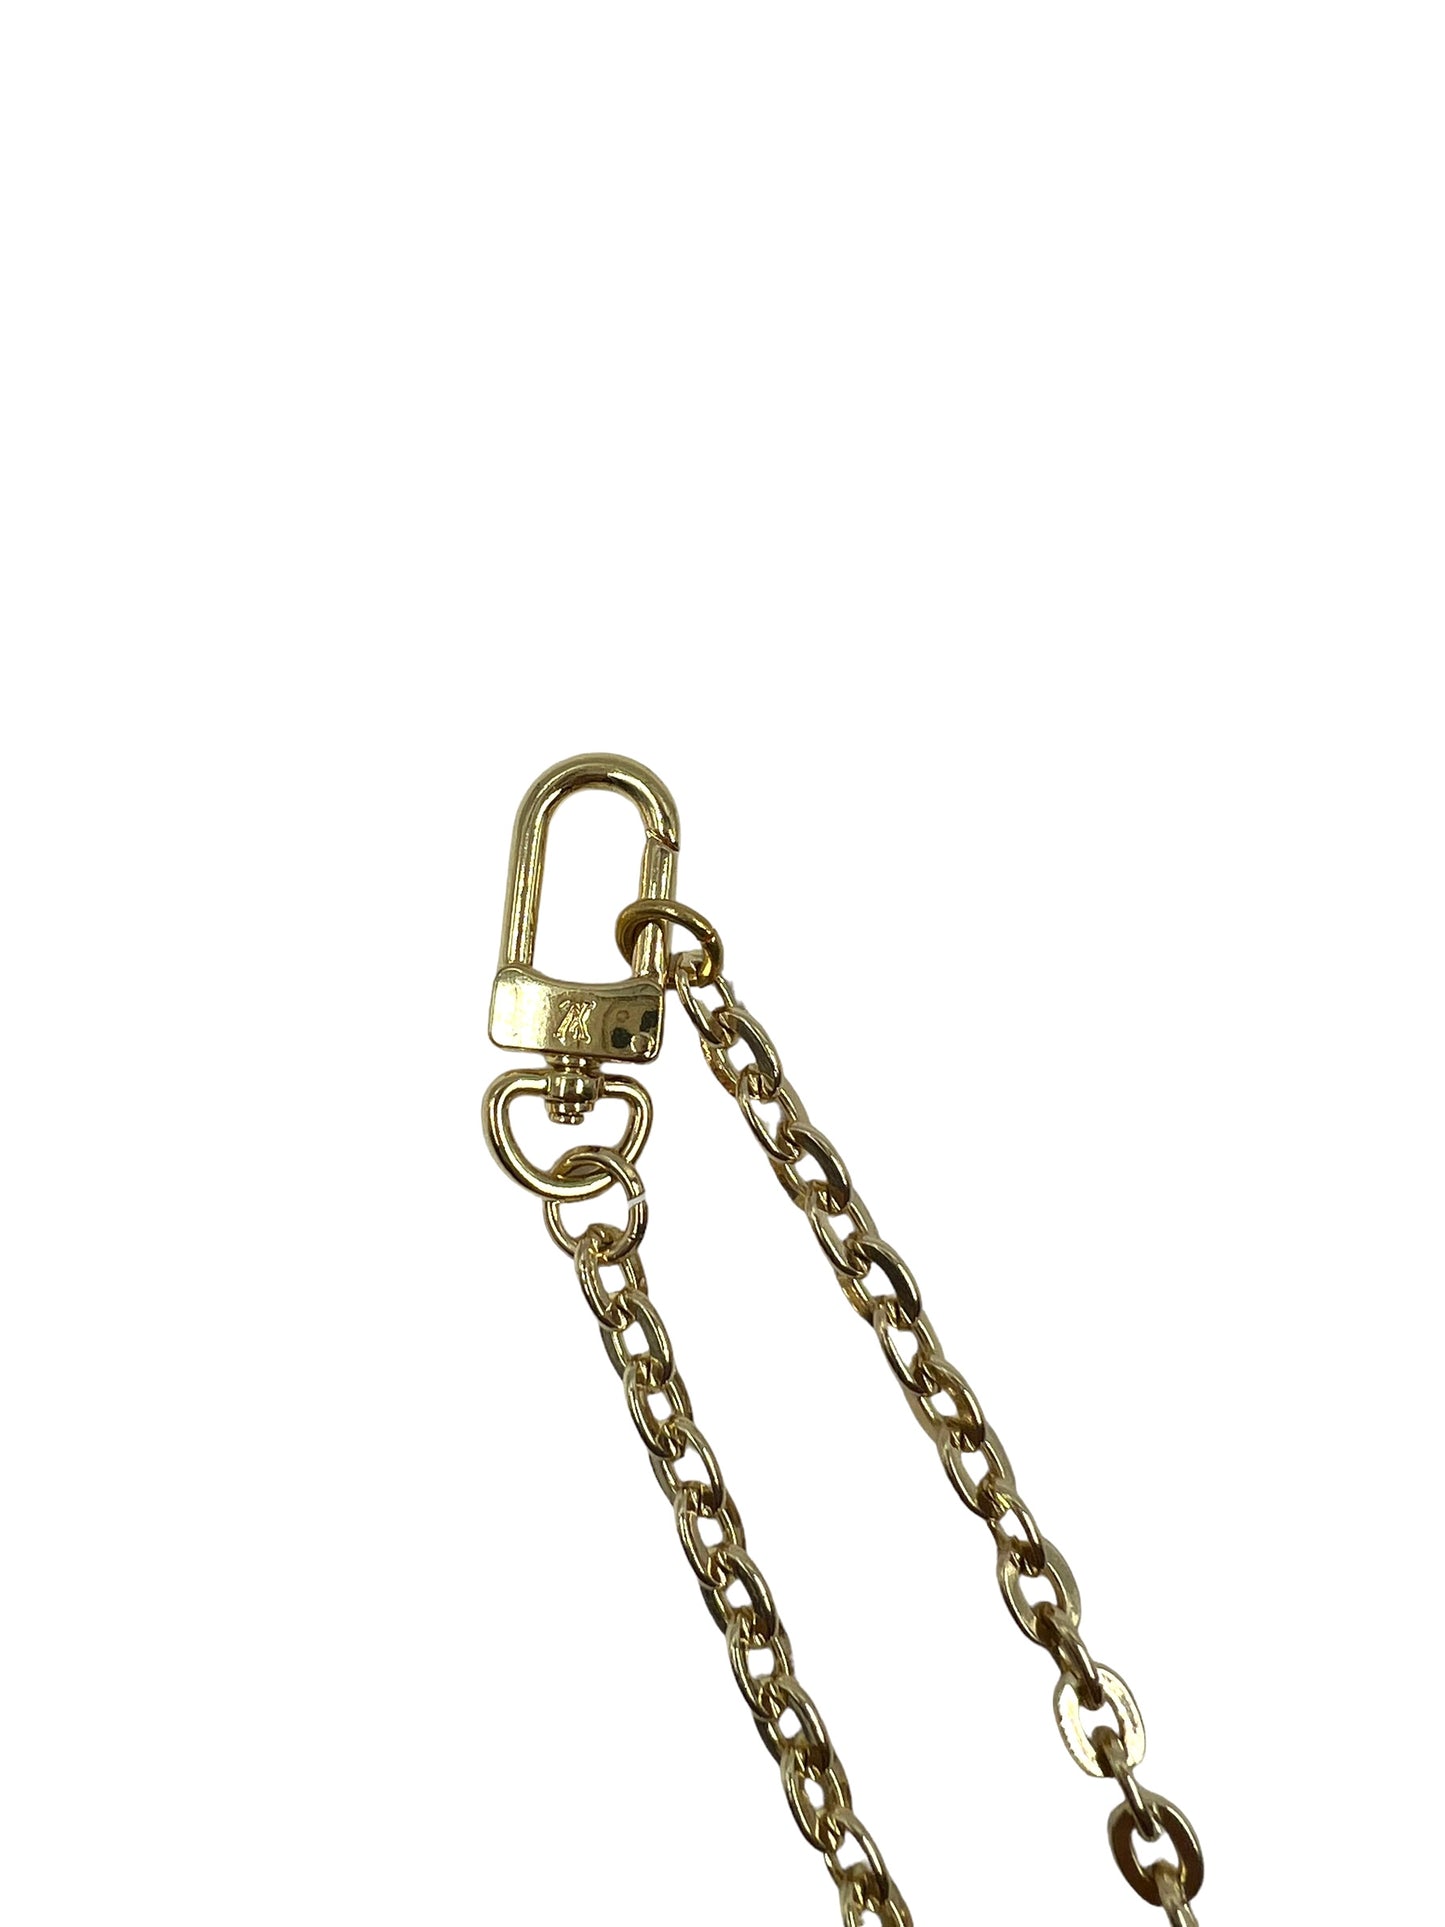 Repurposed Gold Chain Lock Necklace